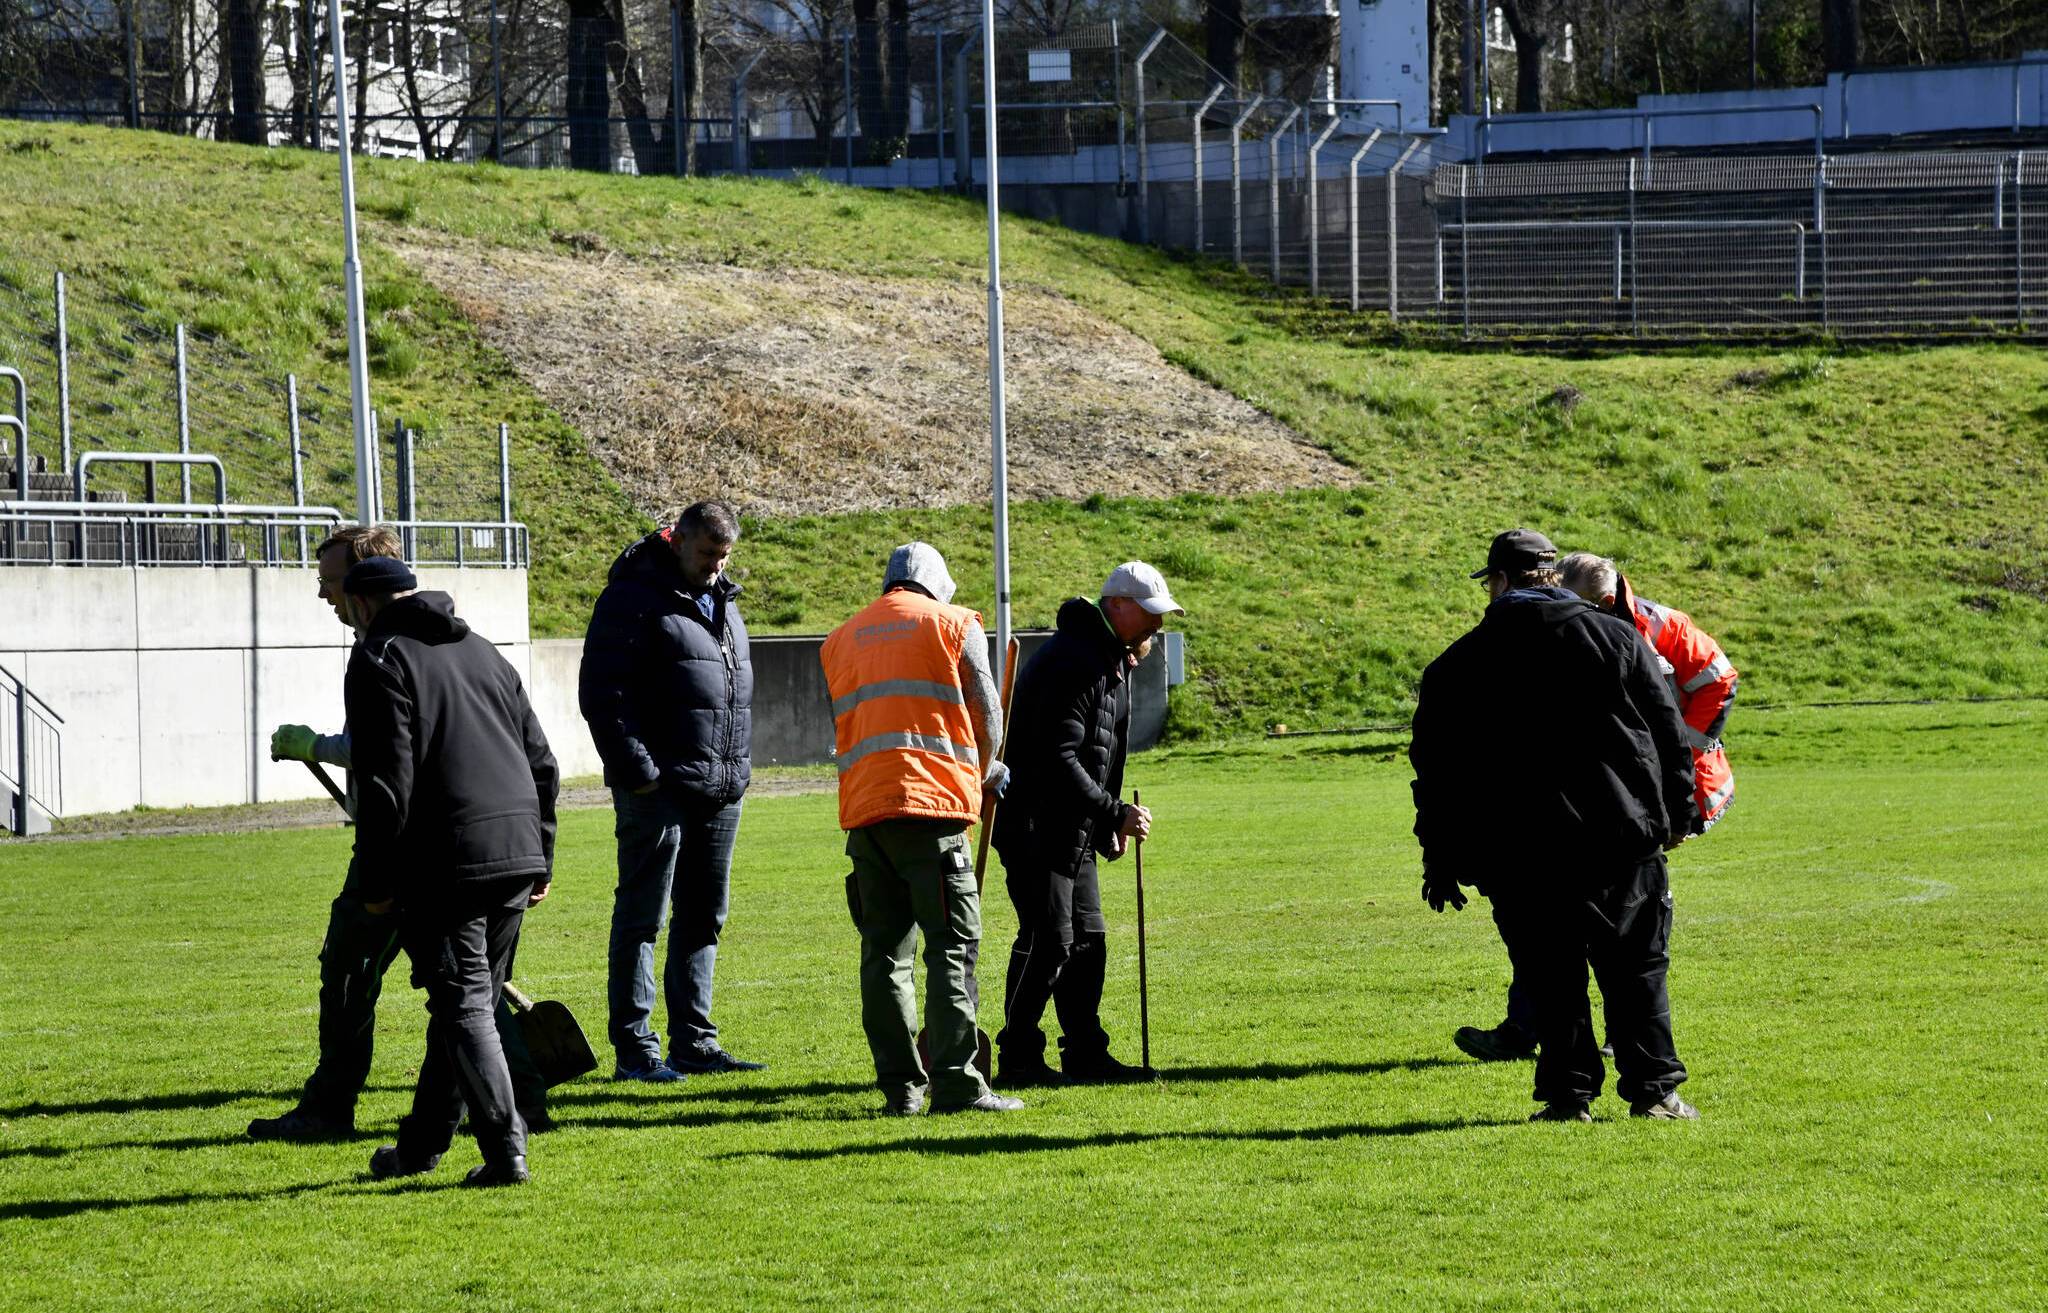 Rasensanierung im Wuppertaler Stadion am Zoo​ gestartet